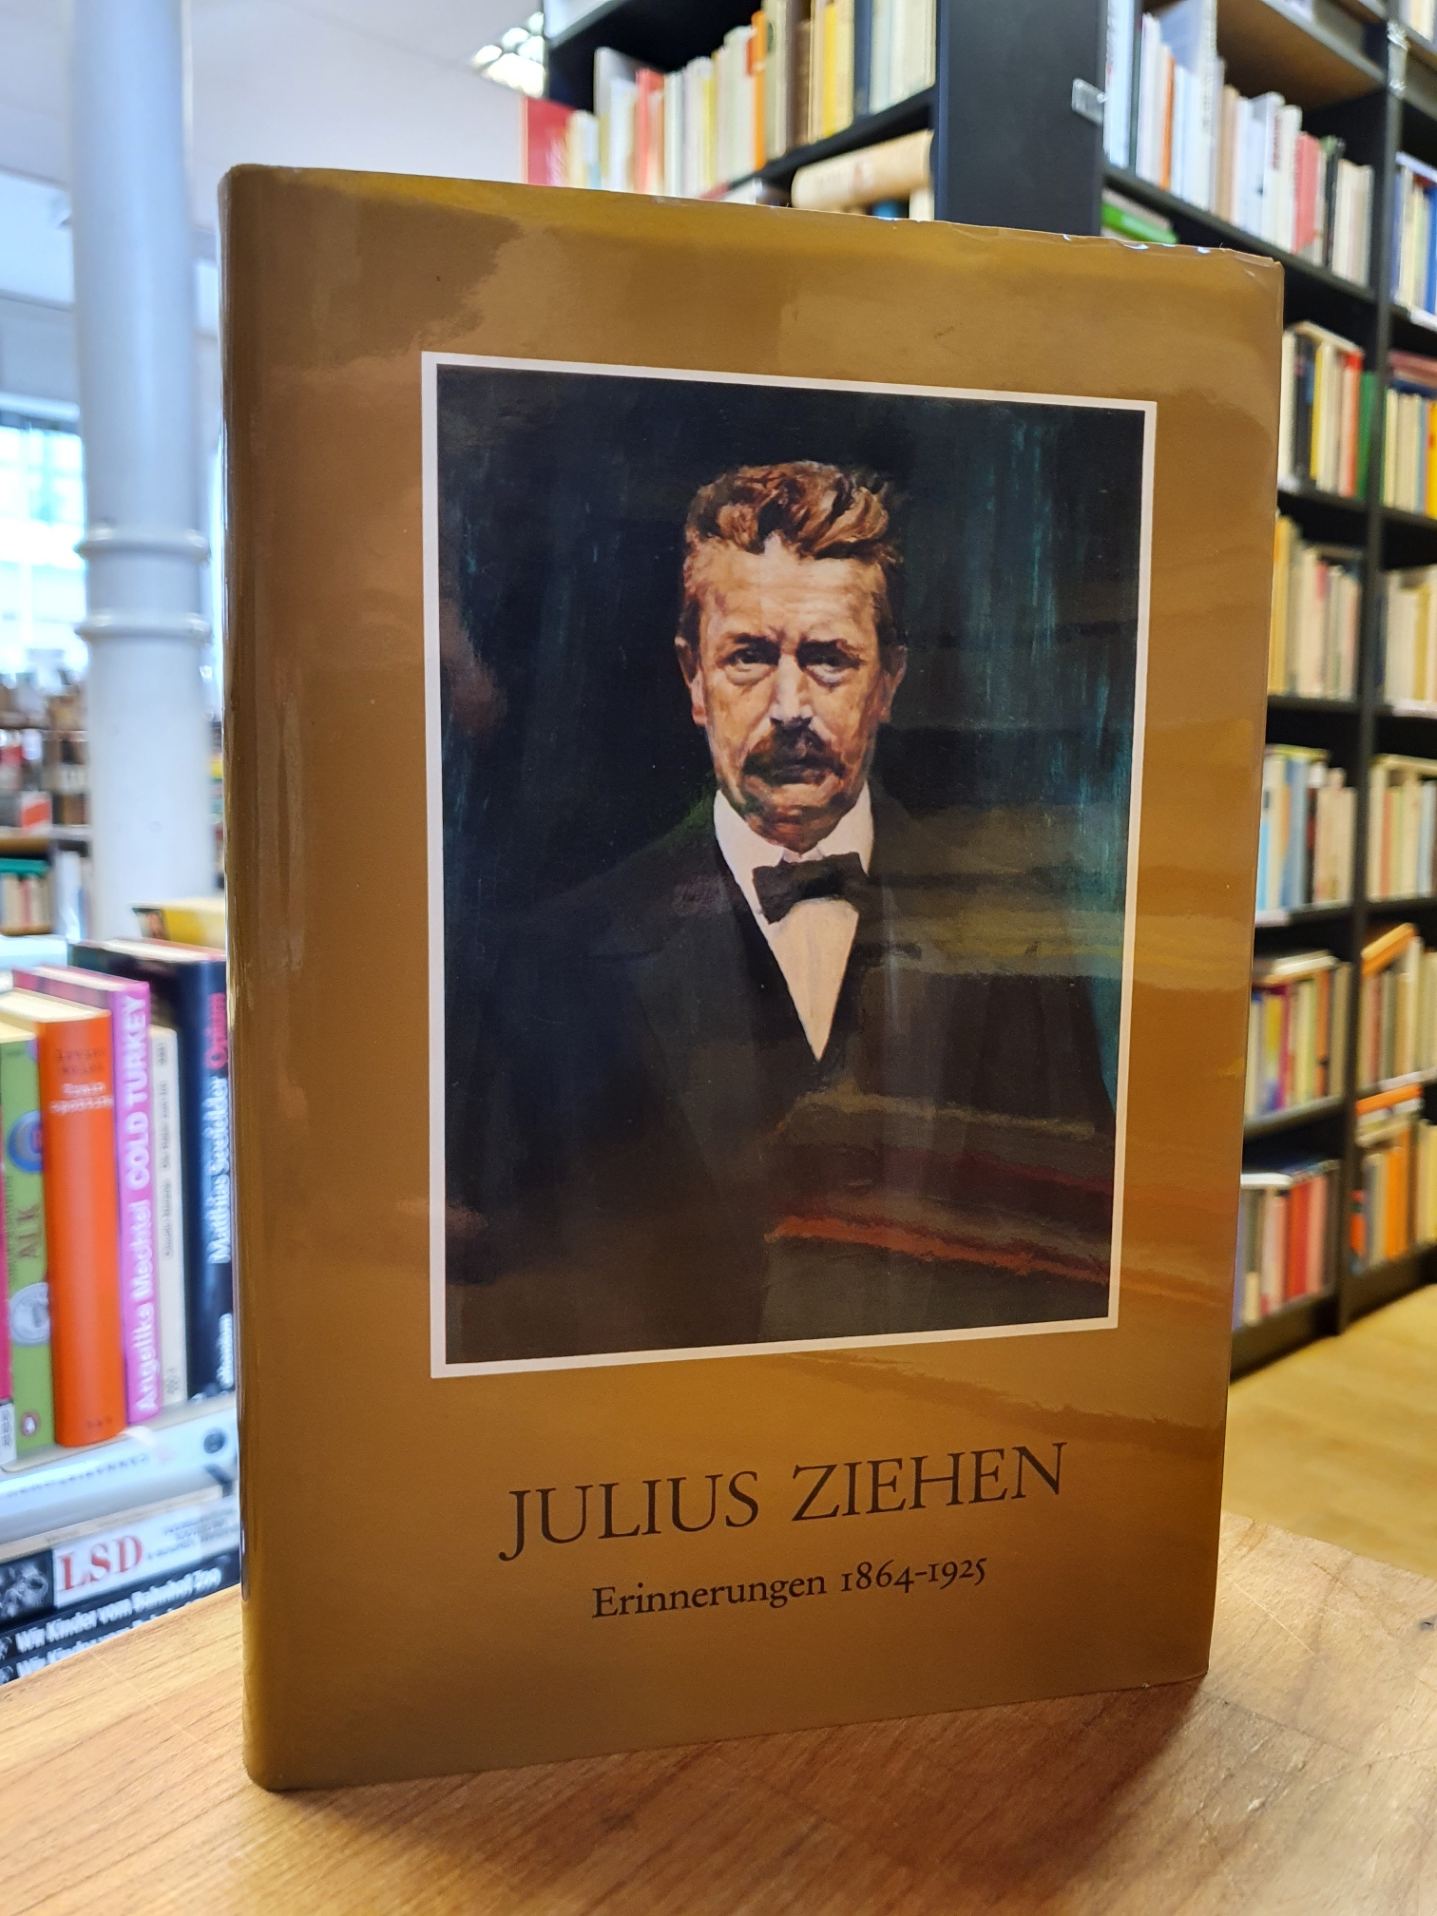 Ziehen, Julius Ziehen – Erinnerungen 1864-1925,